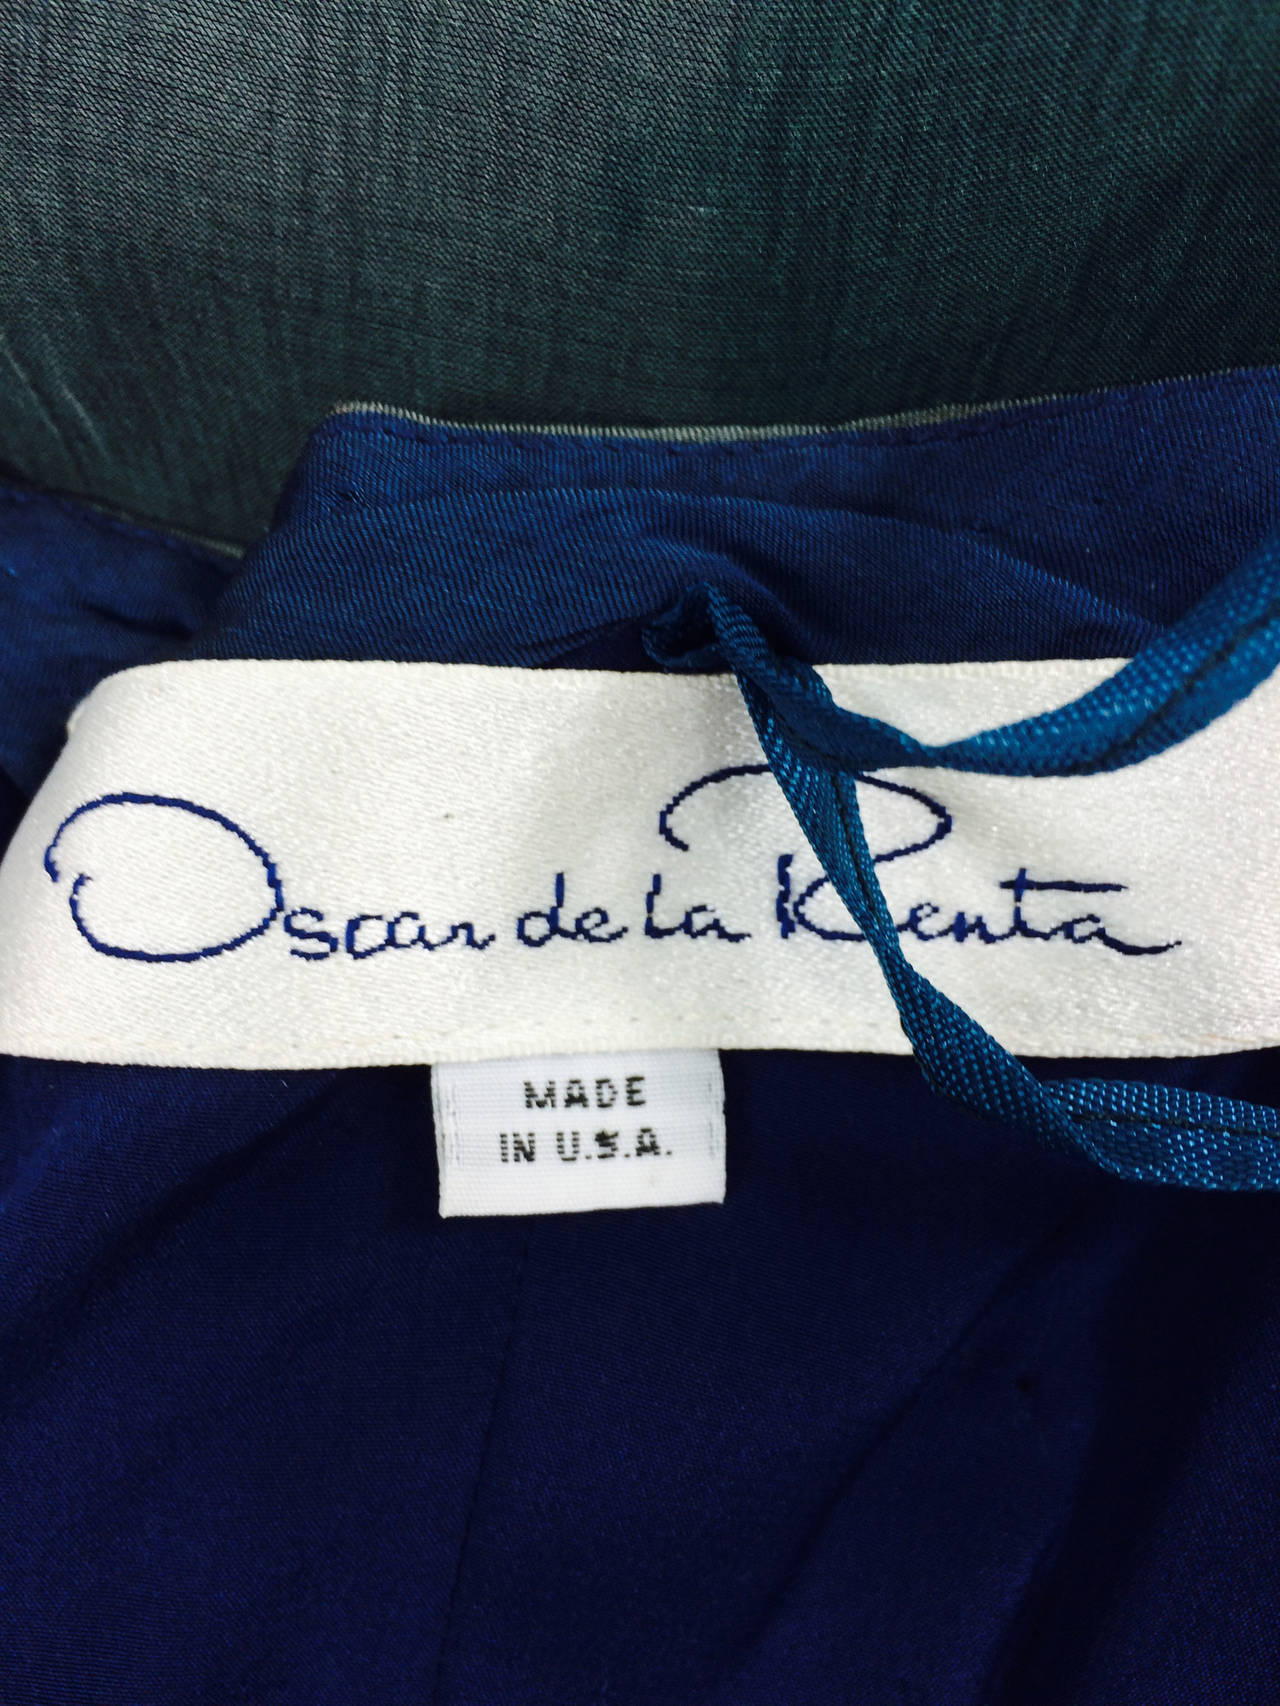 Oscar de la Renta teal tone on tone chiffon goddess gown 1970s 5